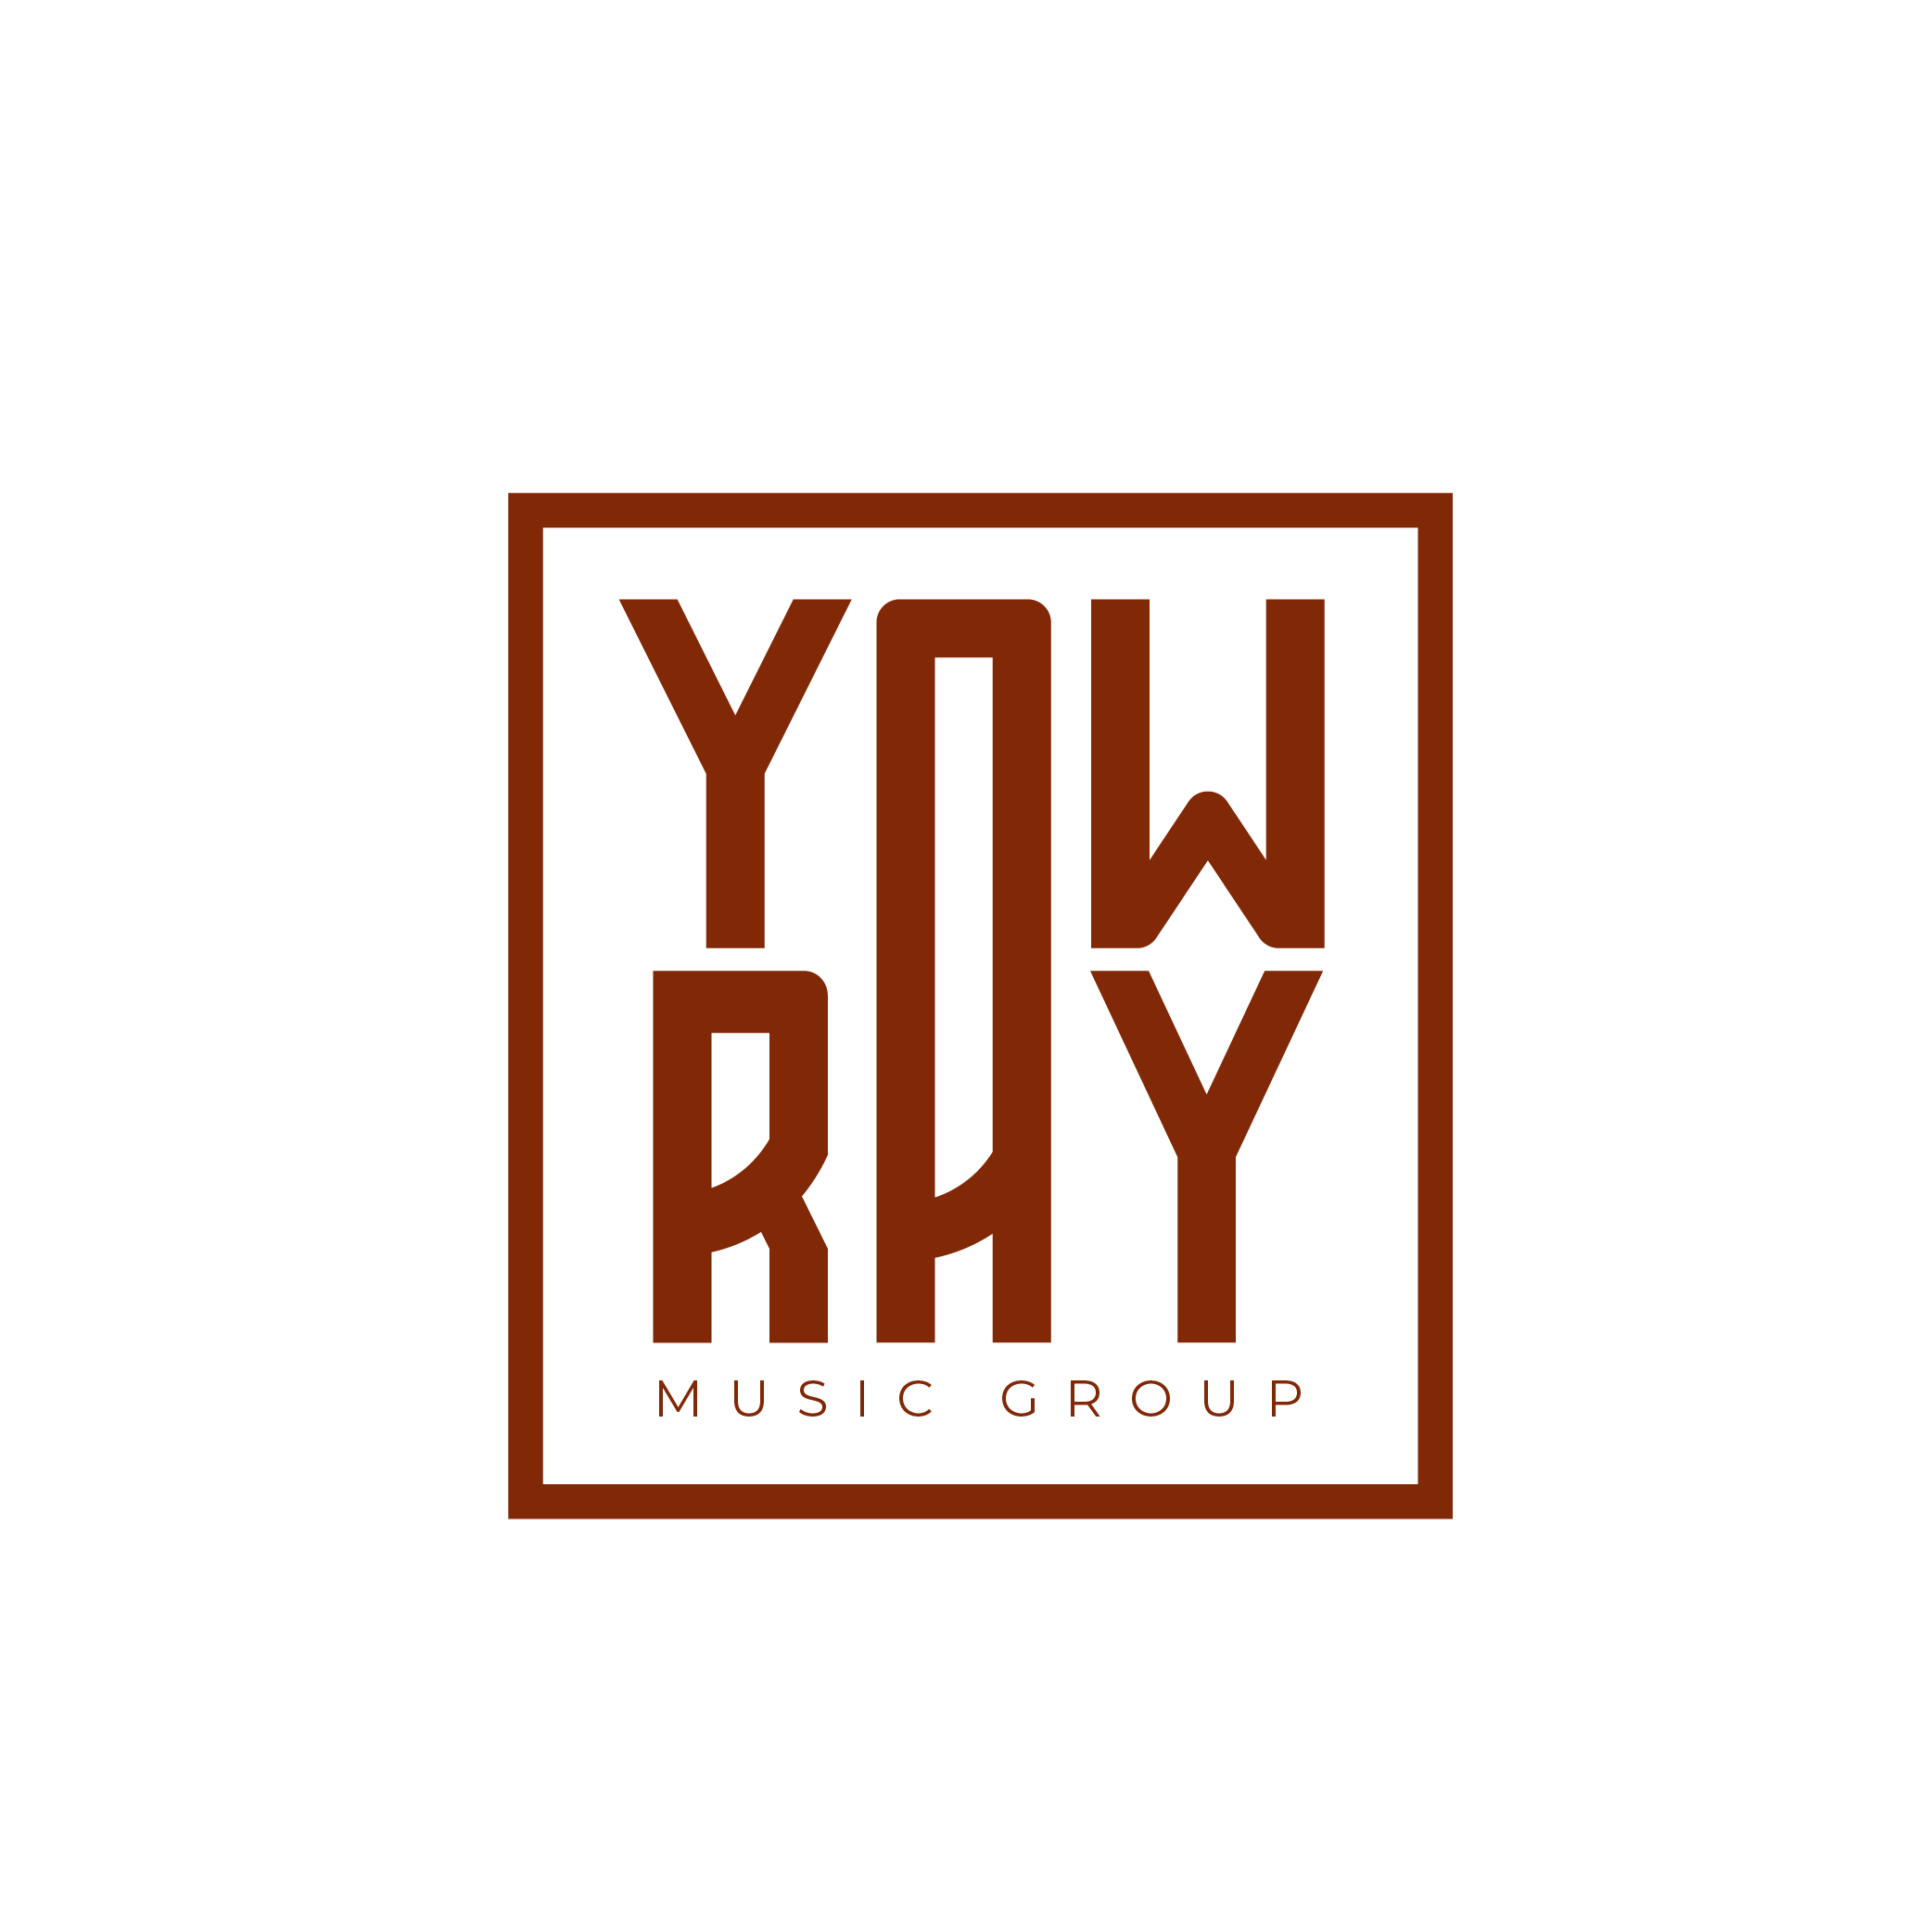 Yaw Ray Music Group Logo